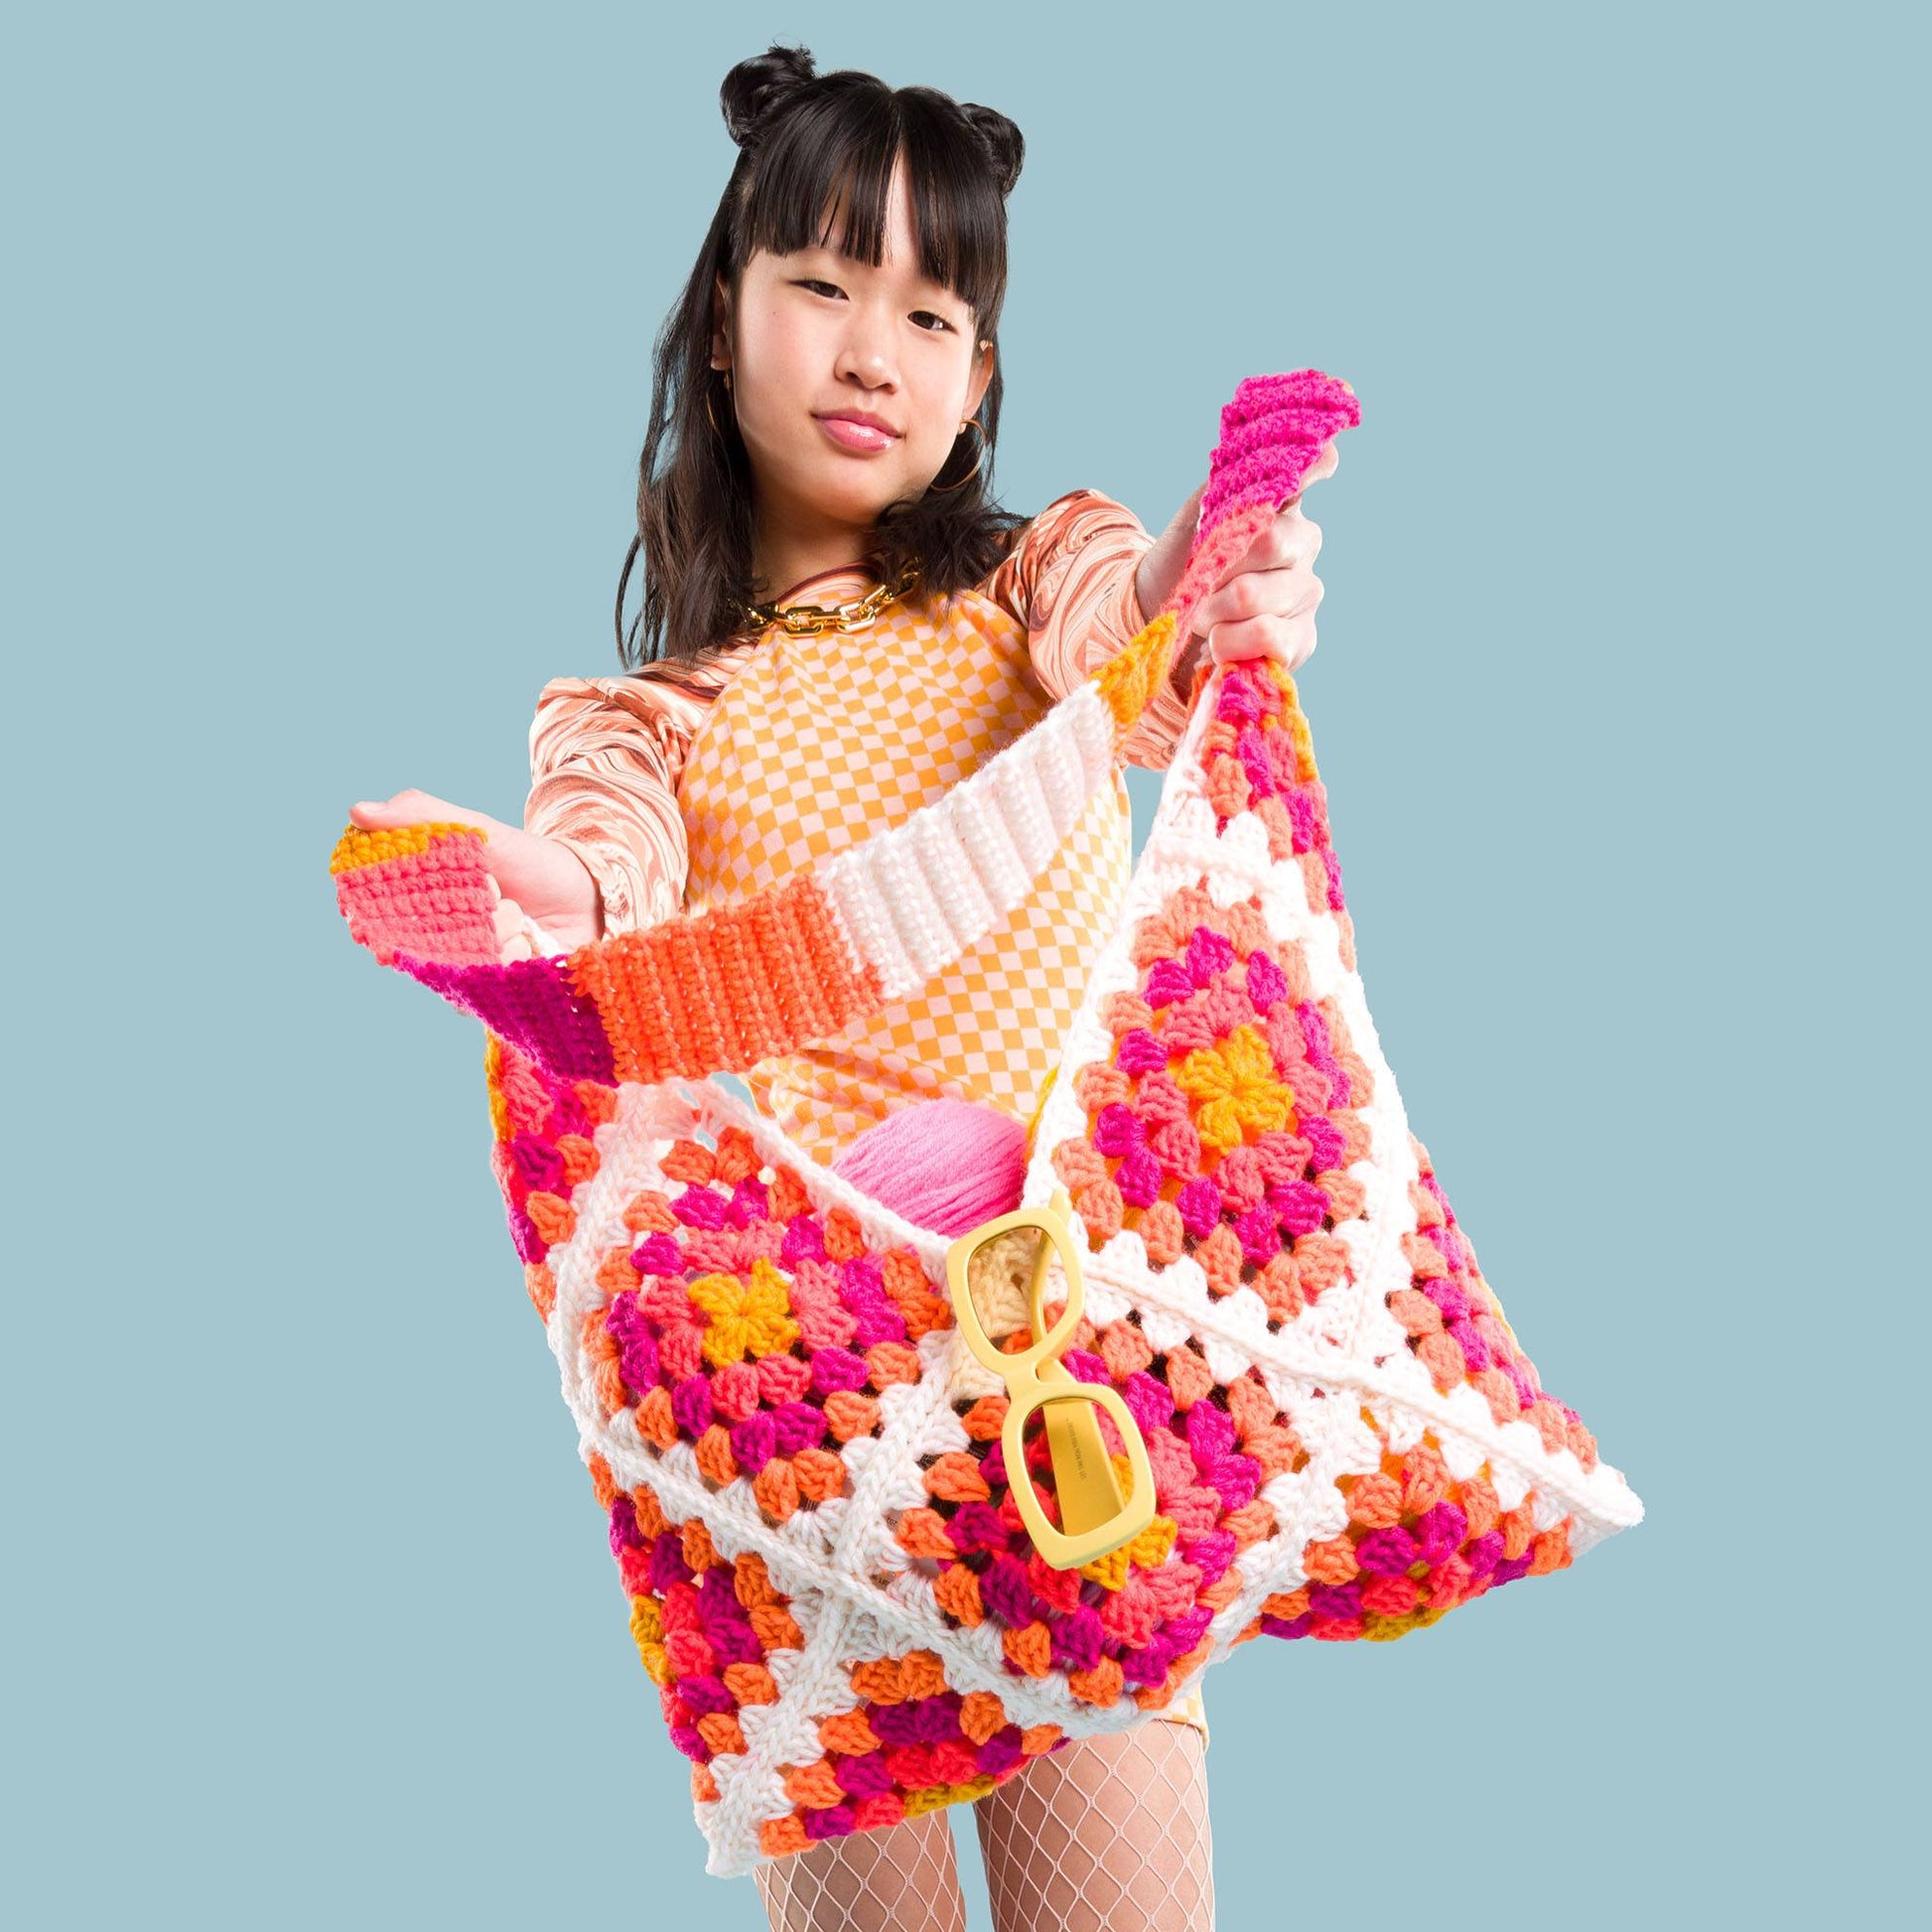 Free Red Heart Crochet Granny Square Serenity Bag Pattern